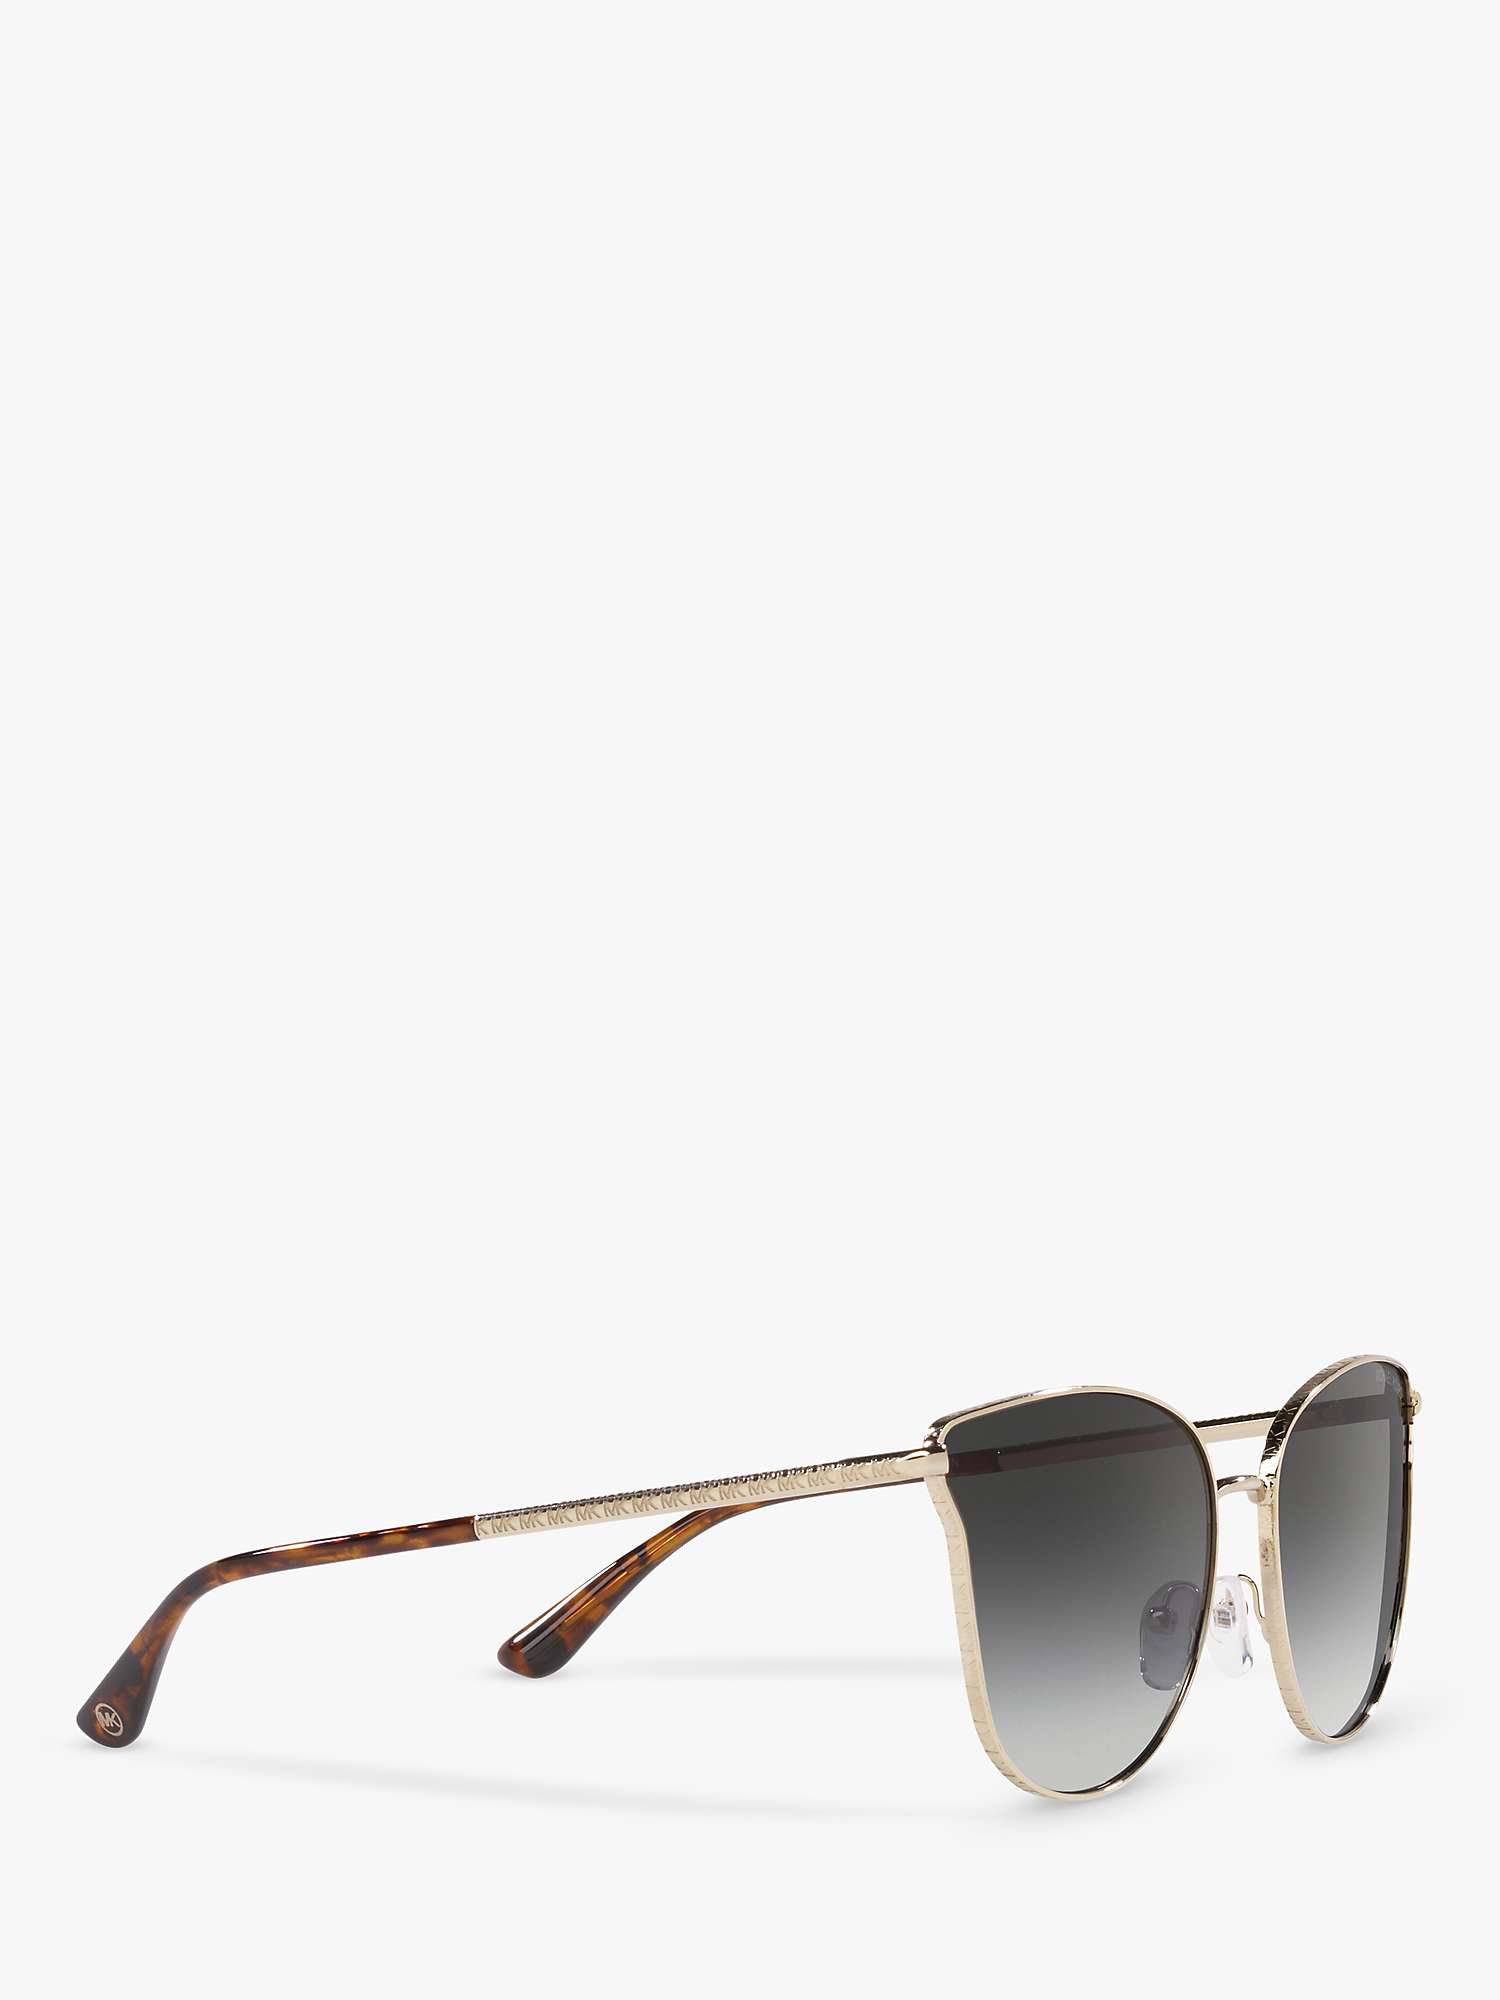 Buy Michael Kors MK1120 Women's Salt Lake City Round Sunglasses, Gold/Grey Gradient Online at johnlewis.com